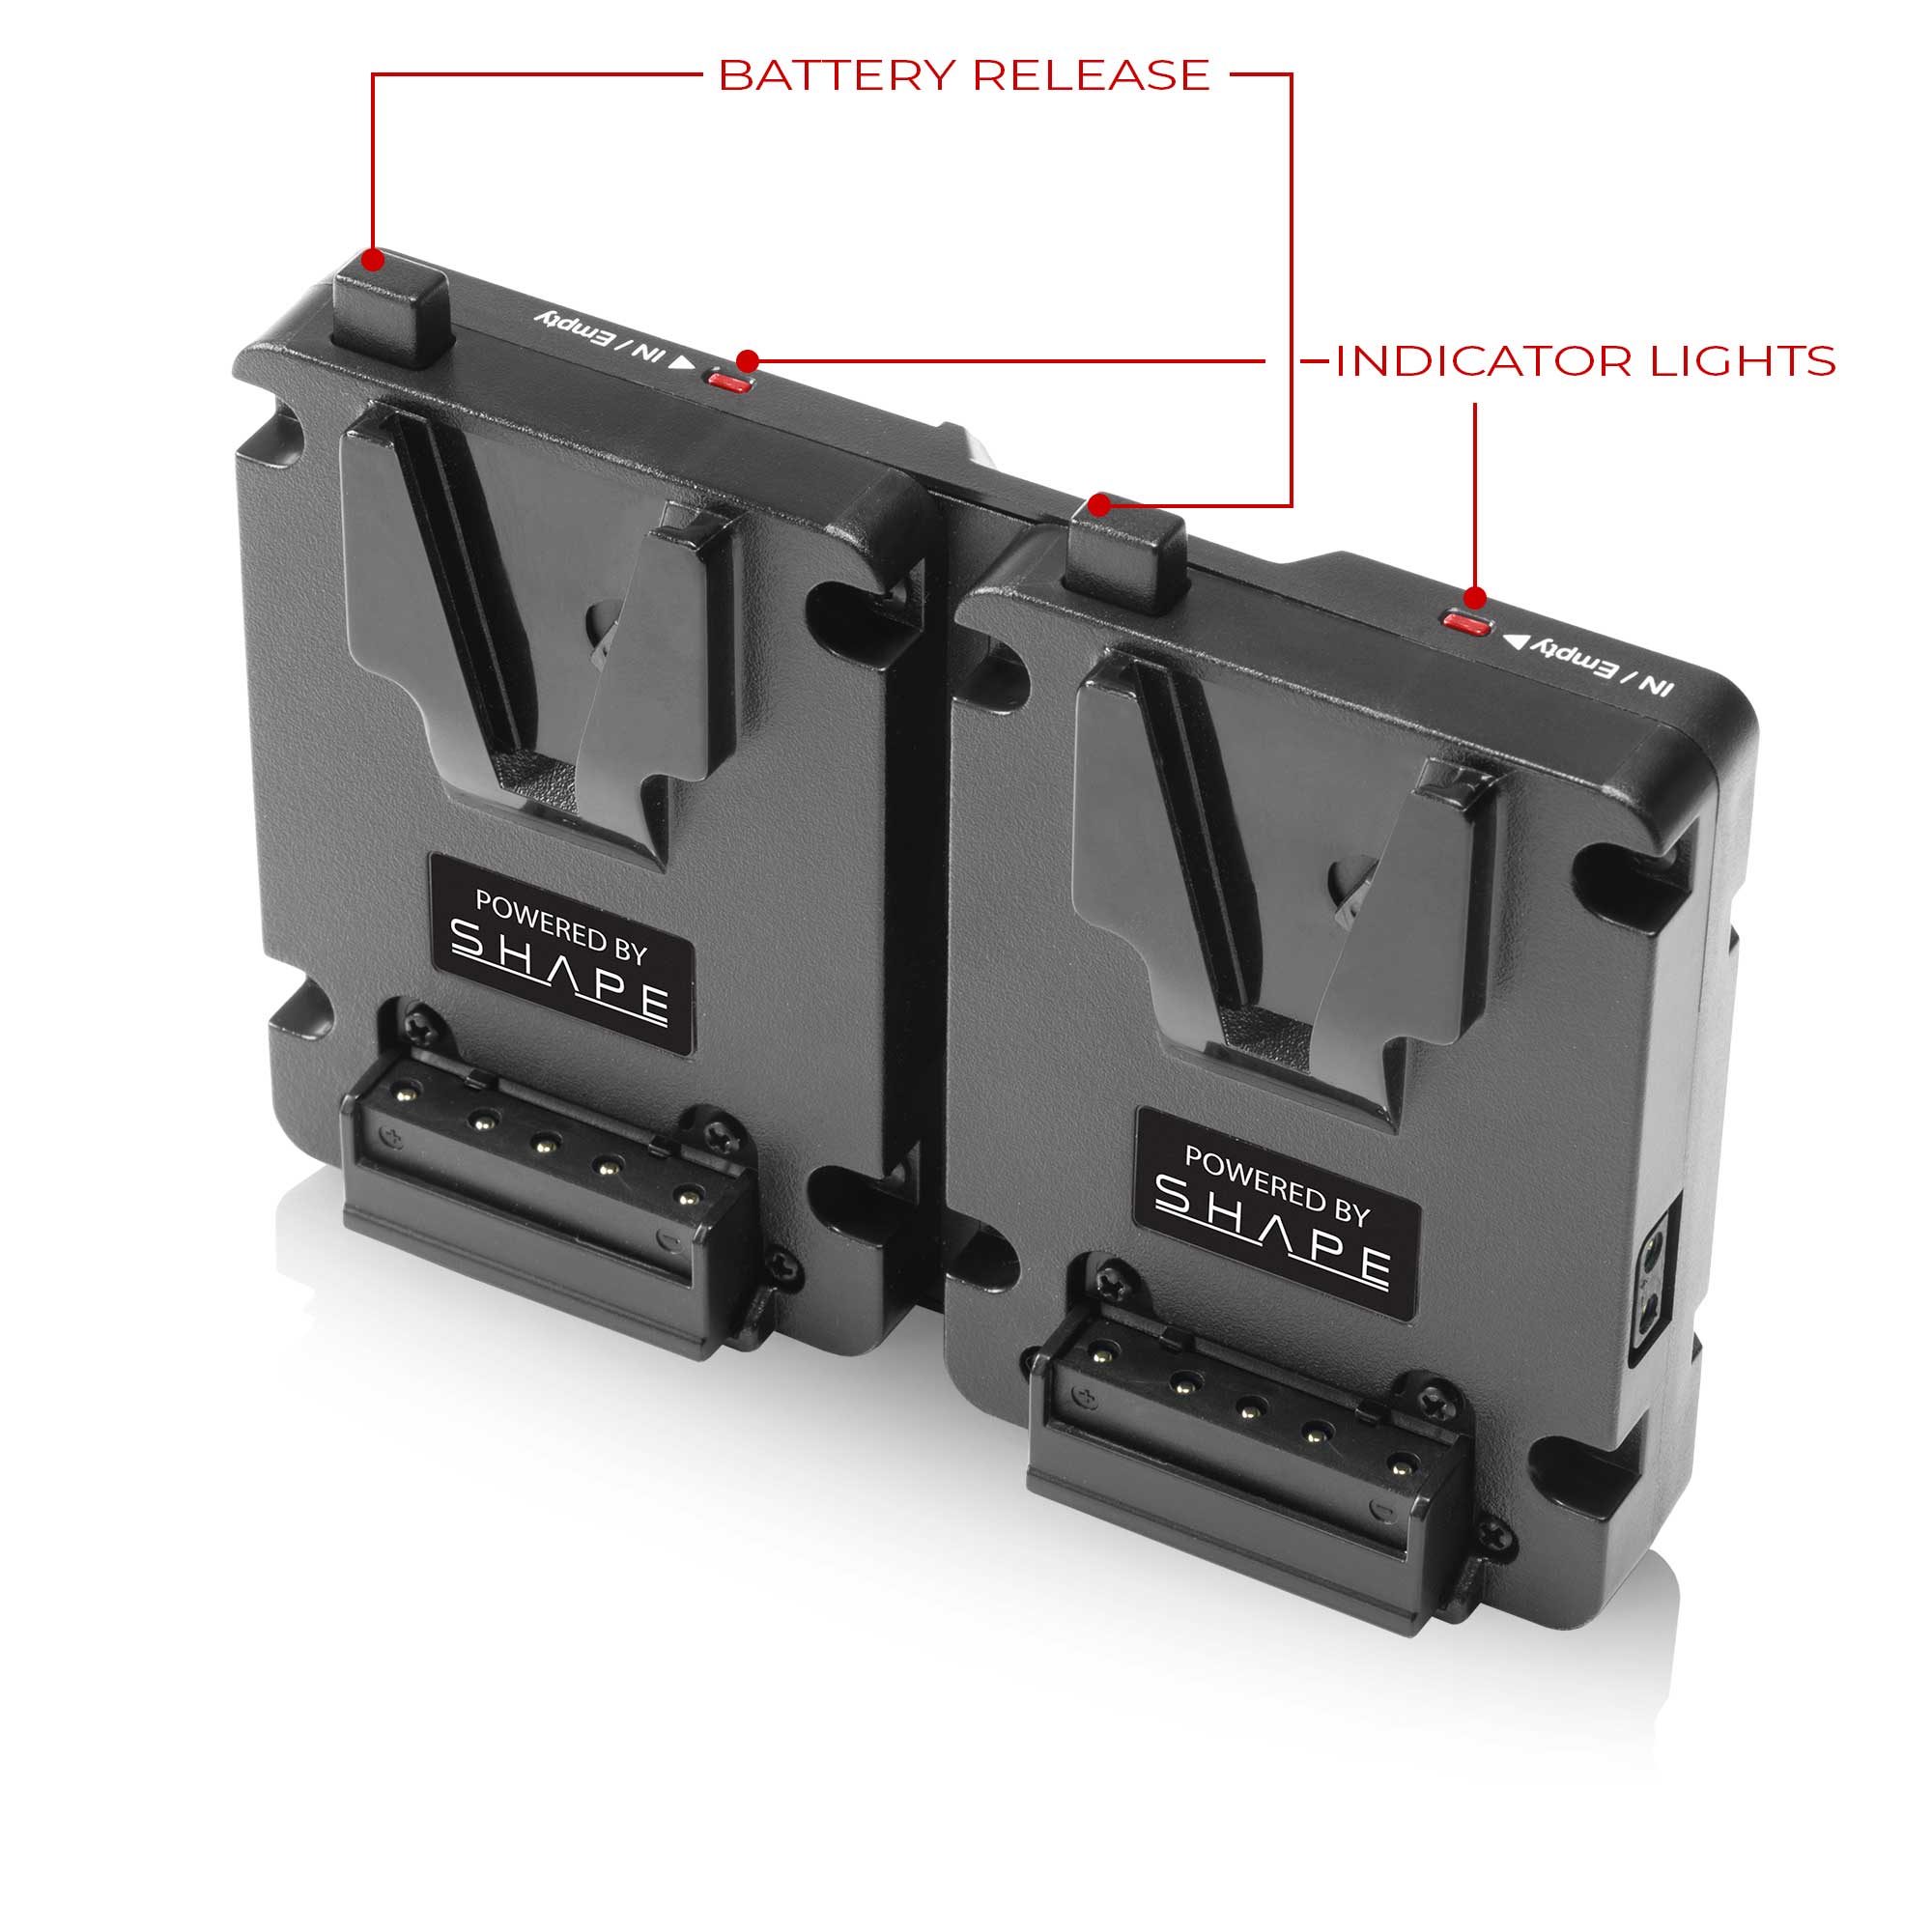 SHAPE Full Play Mini Batteries 99 Wh with Dual V-Mount Hot Swap Mini Battery Plate - SHAPE wlb